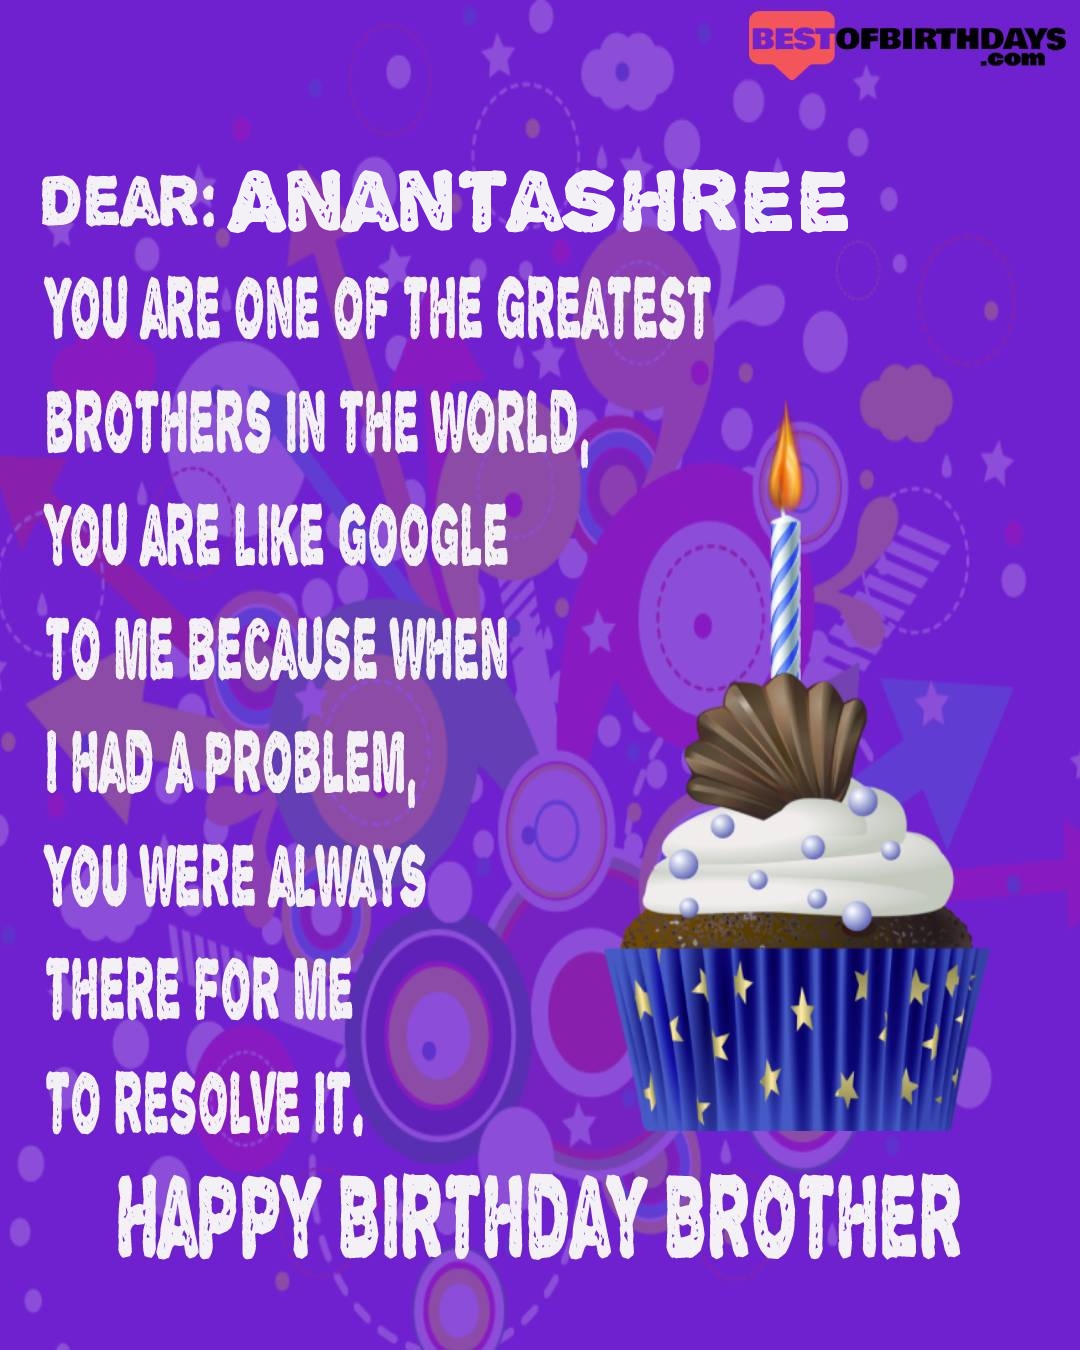 Happy birthday anantashree bhai brother bro